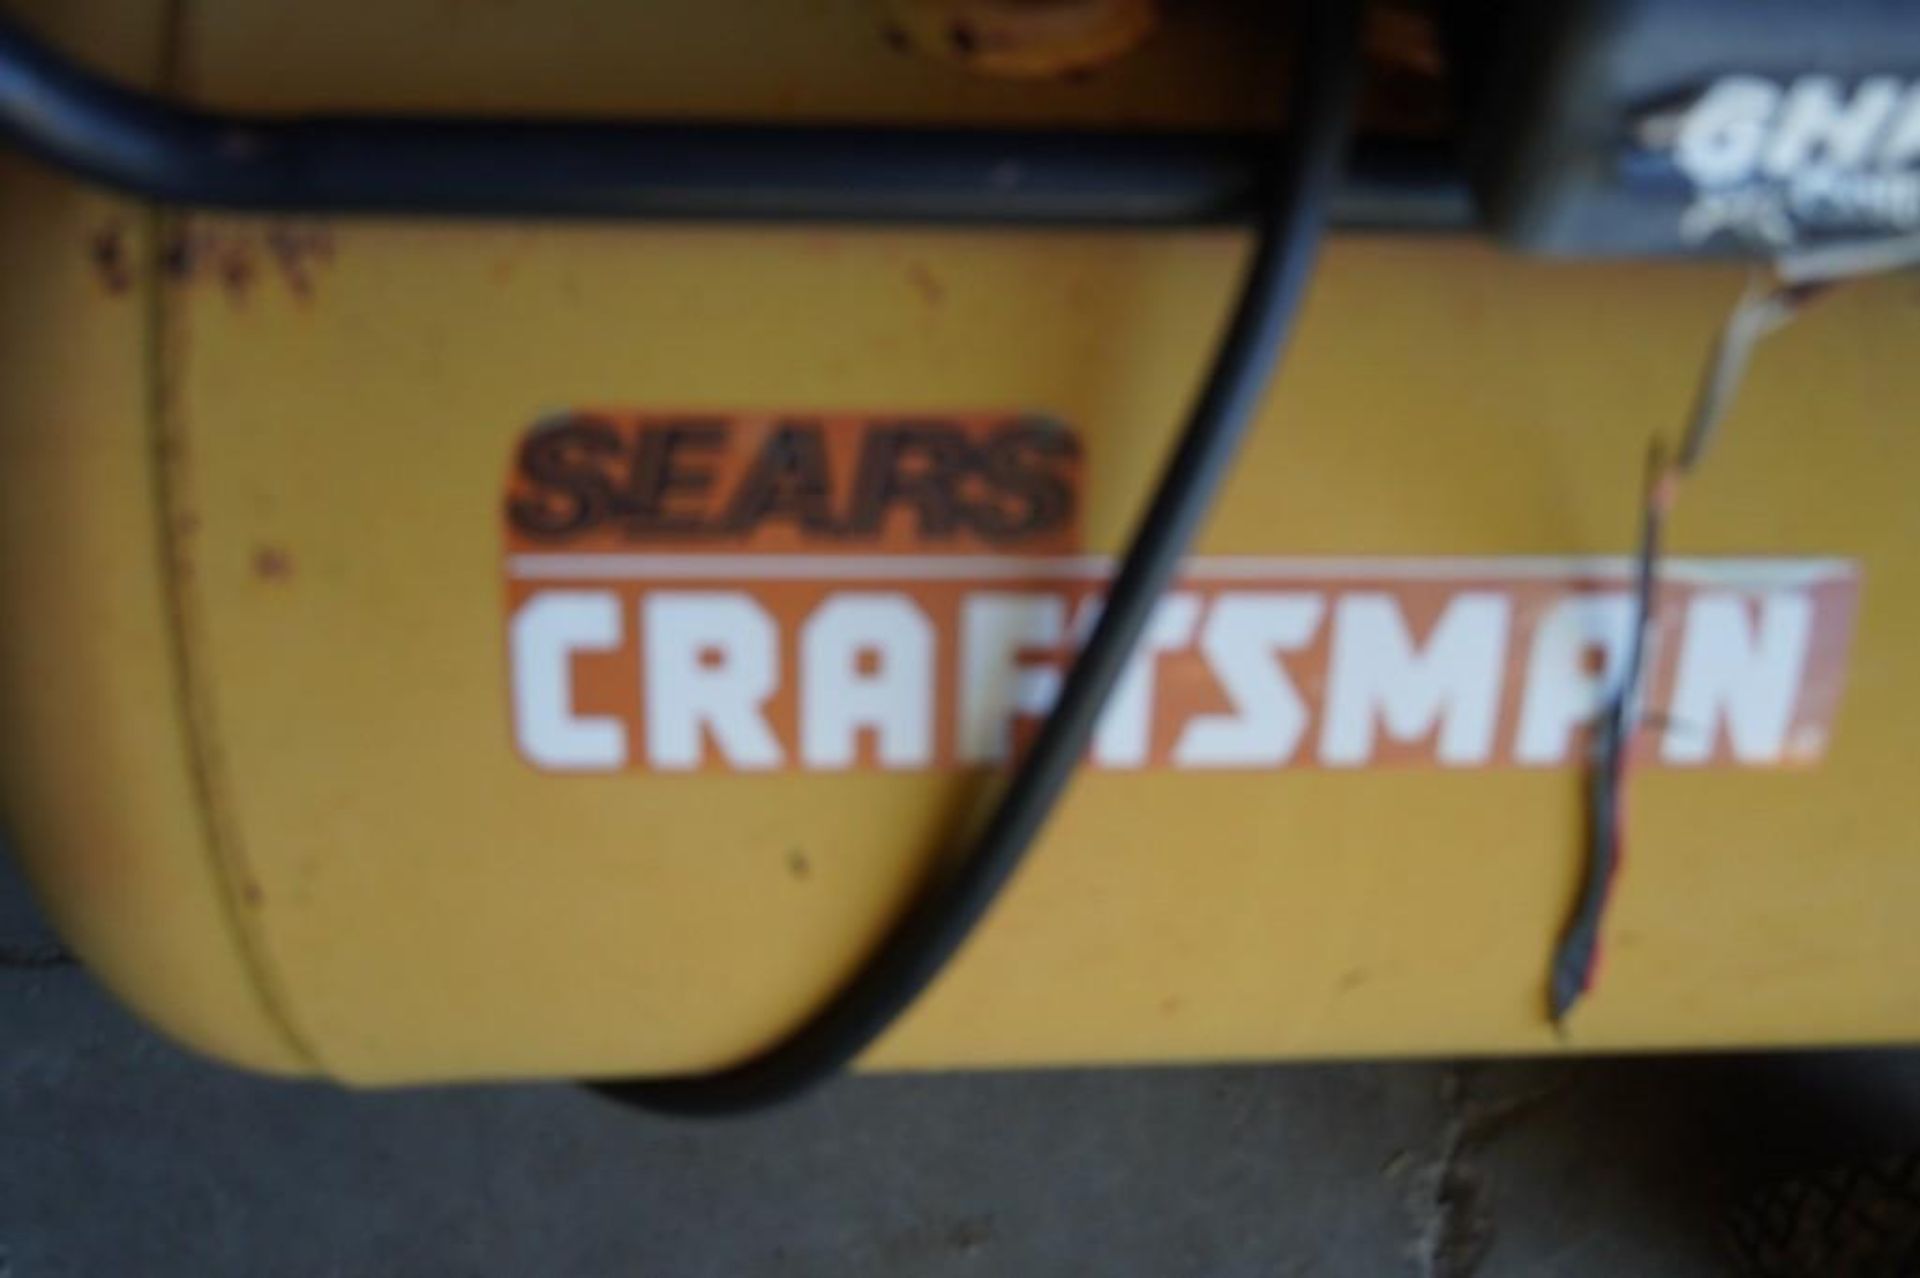 Sears Craftsman Portable Air Compressor - Image 5 of 8